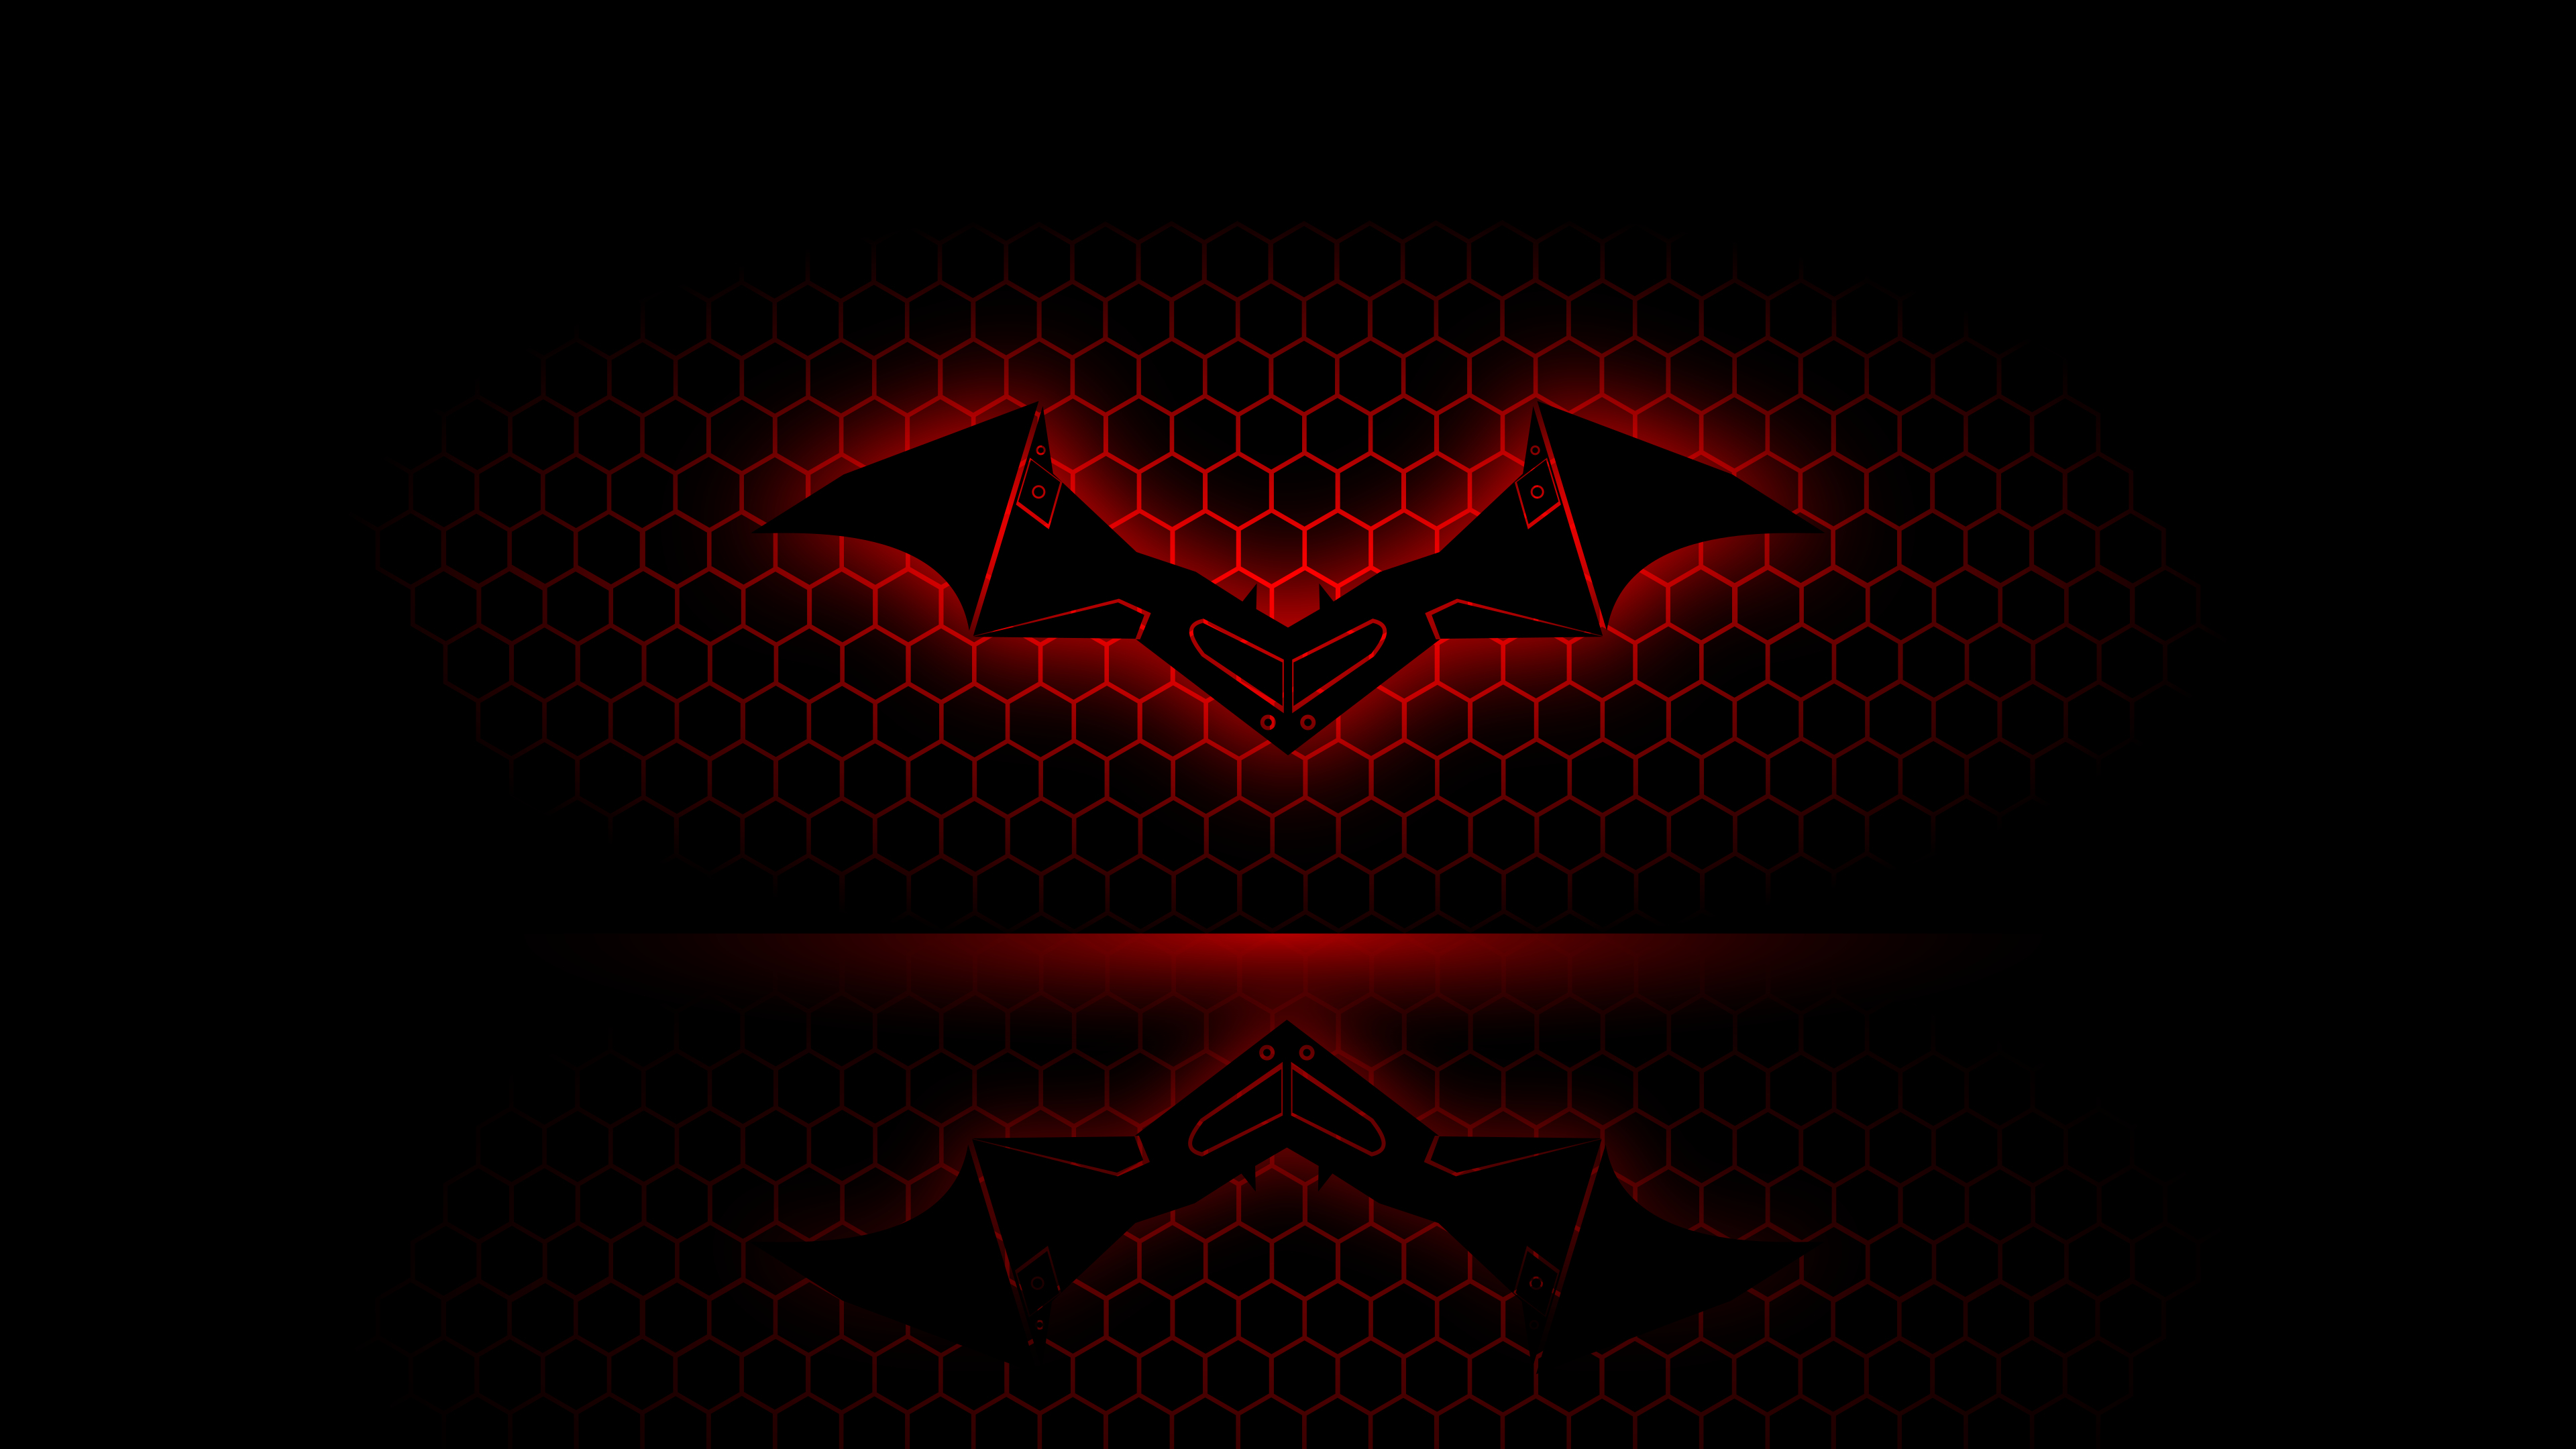 3840x2160 4K The Batman Logo 4K Wallpaper, HD Superheroes 4K Wallpapers,  Images, Photos and Background - Wallpapers Den